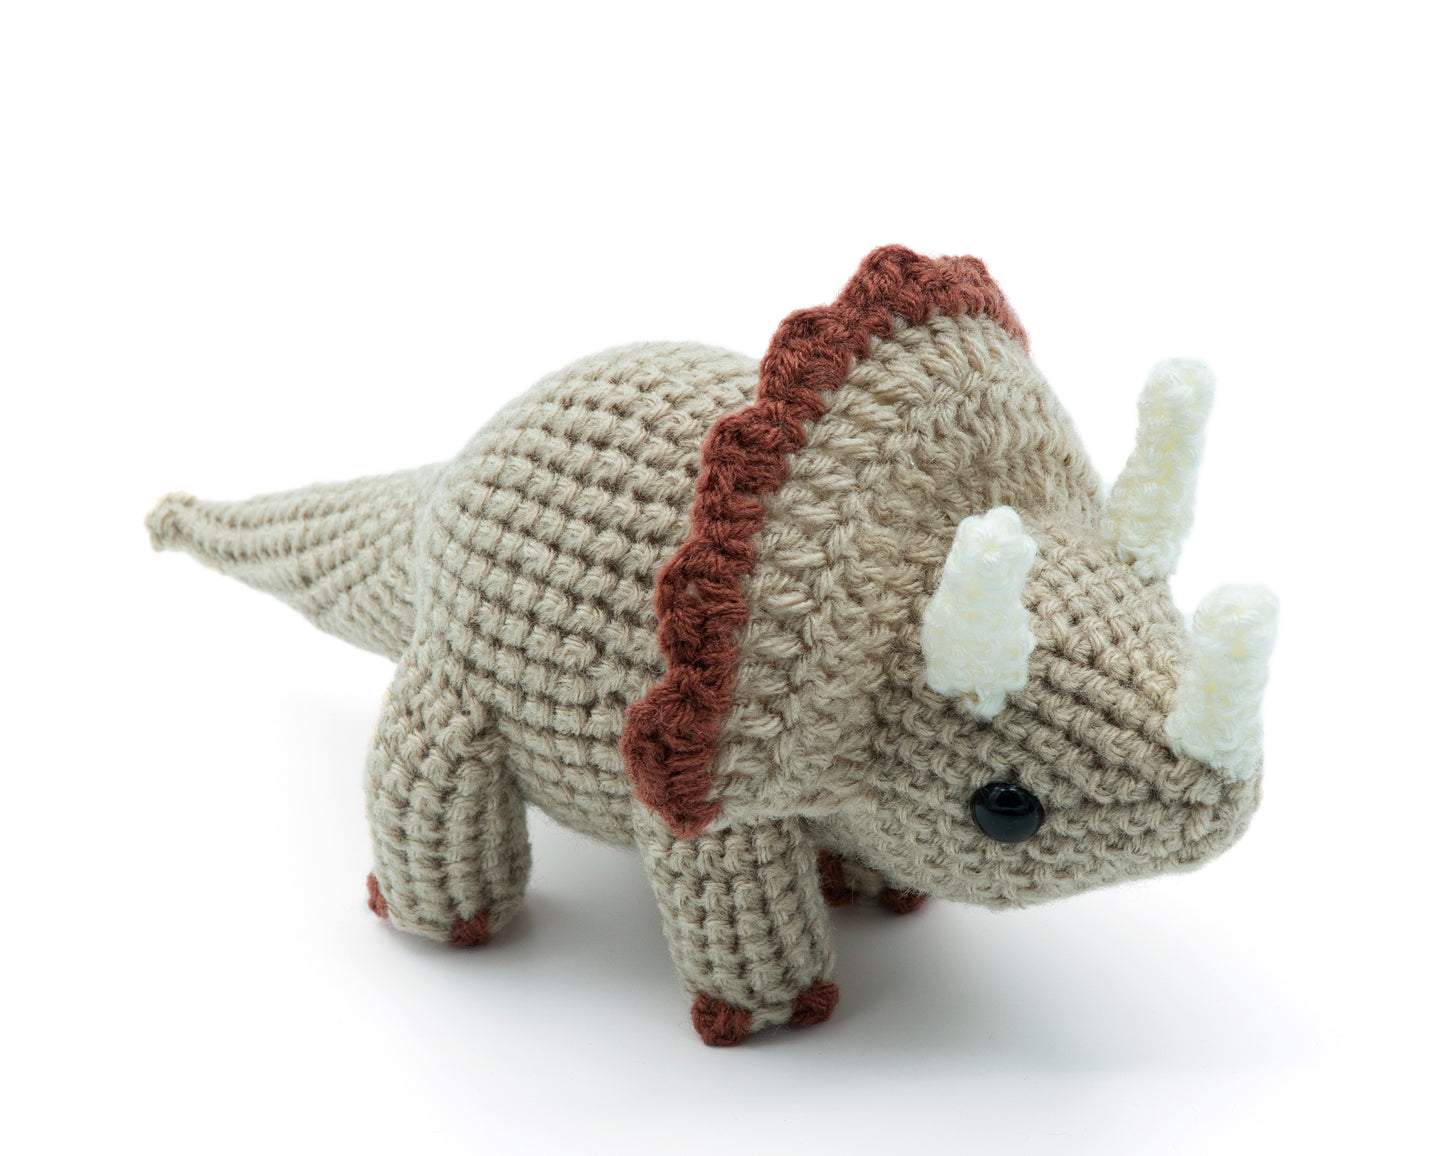 amigurumi crochet triceratops pattern close up the horns